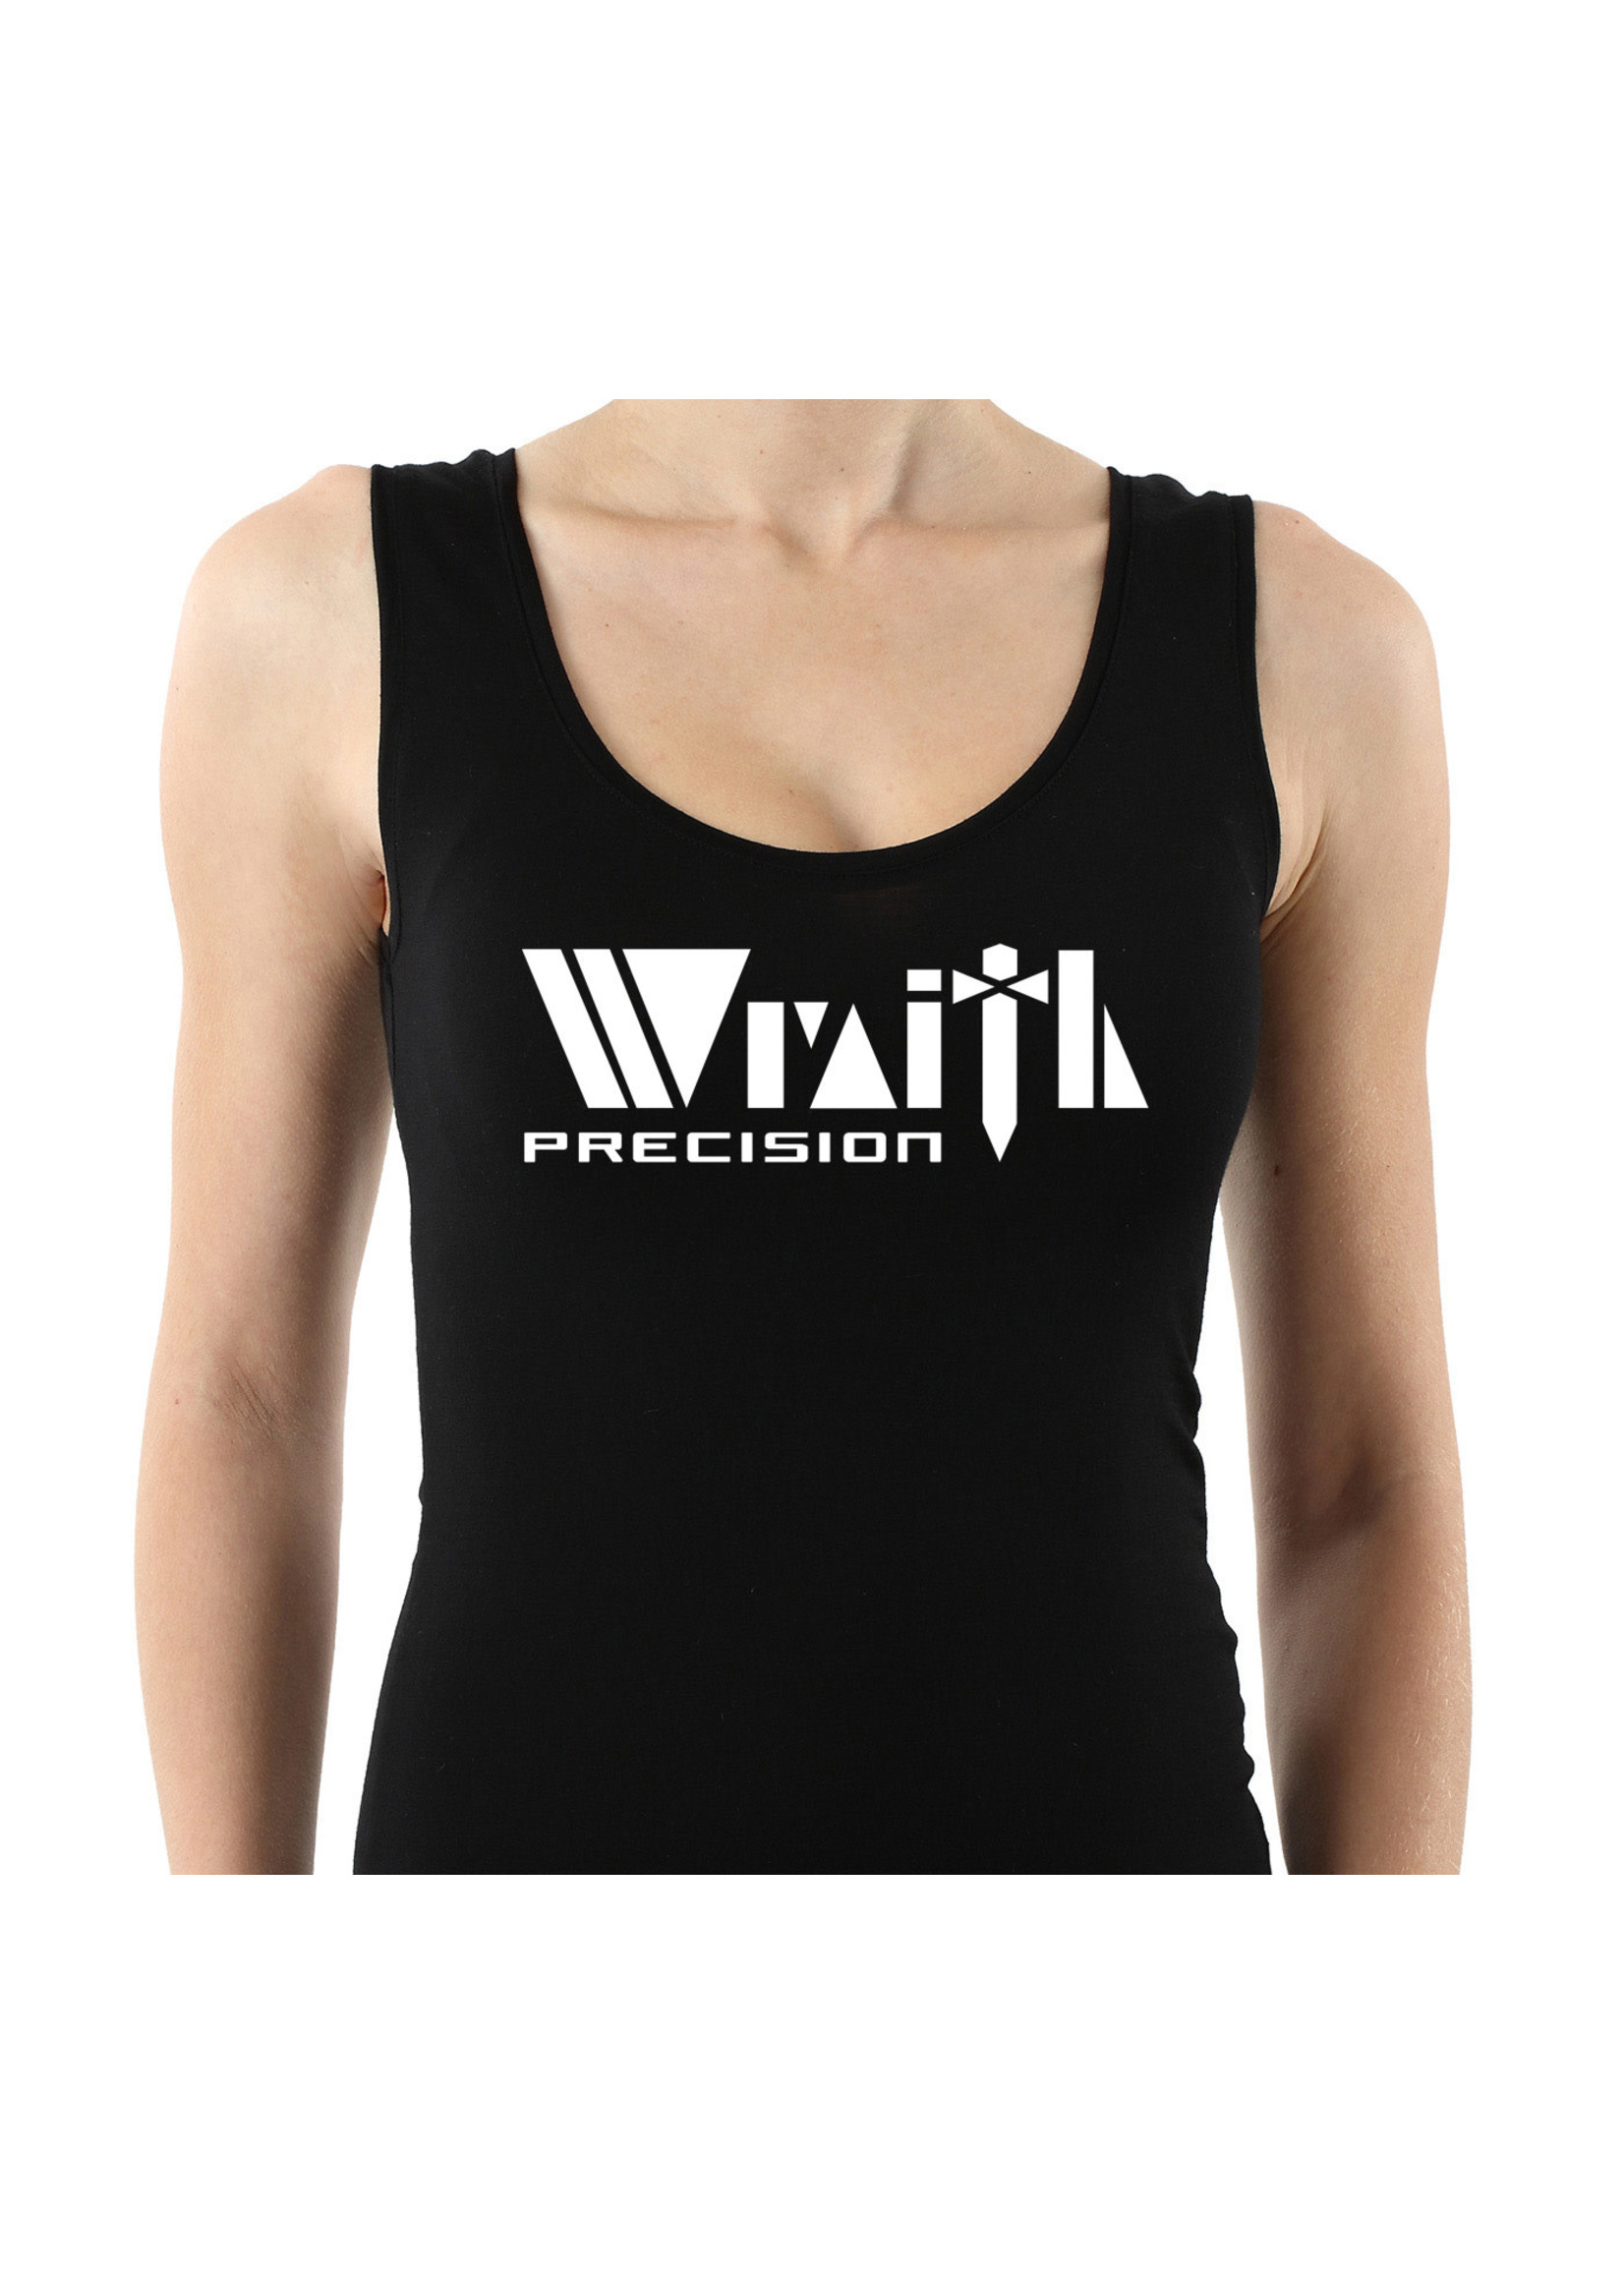 Wraith Precision Wraith Precision Women's Tank Top